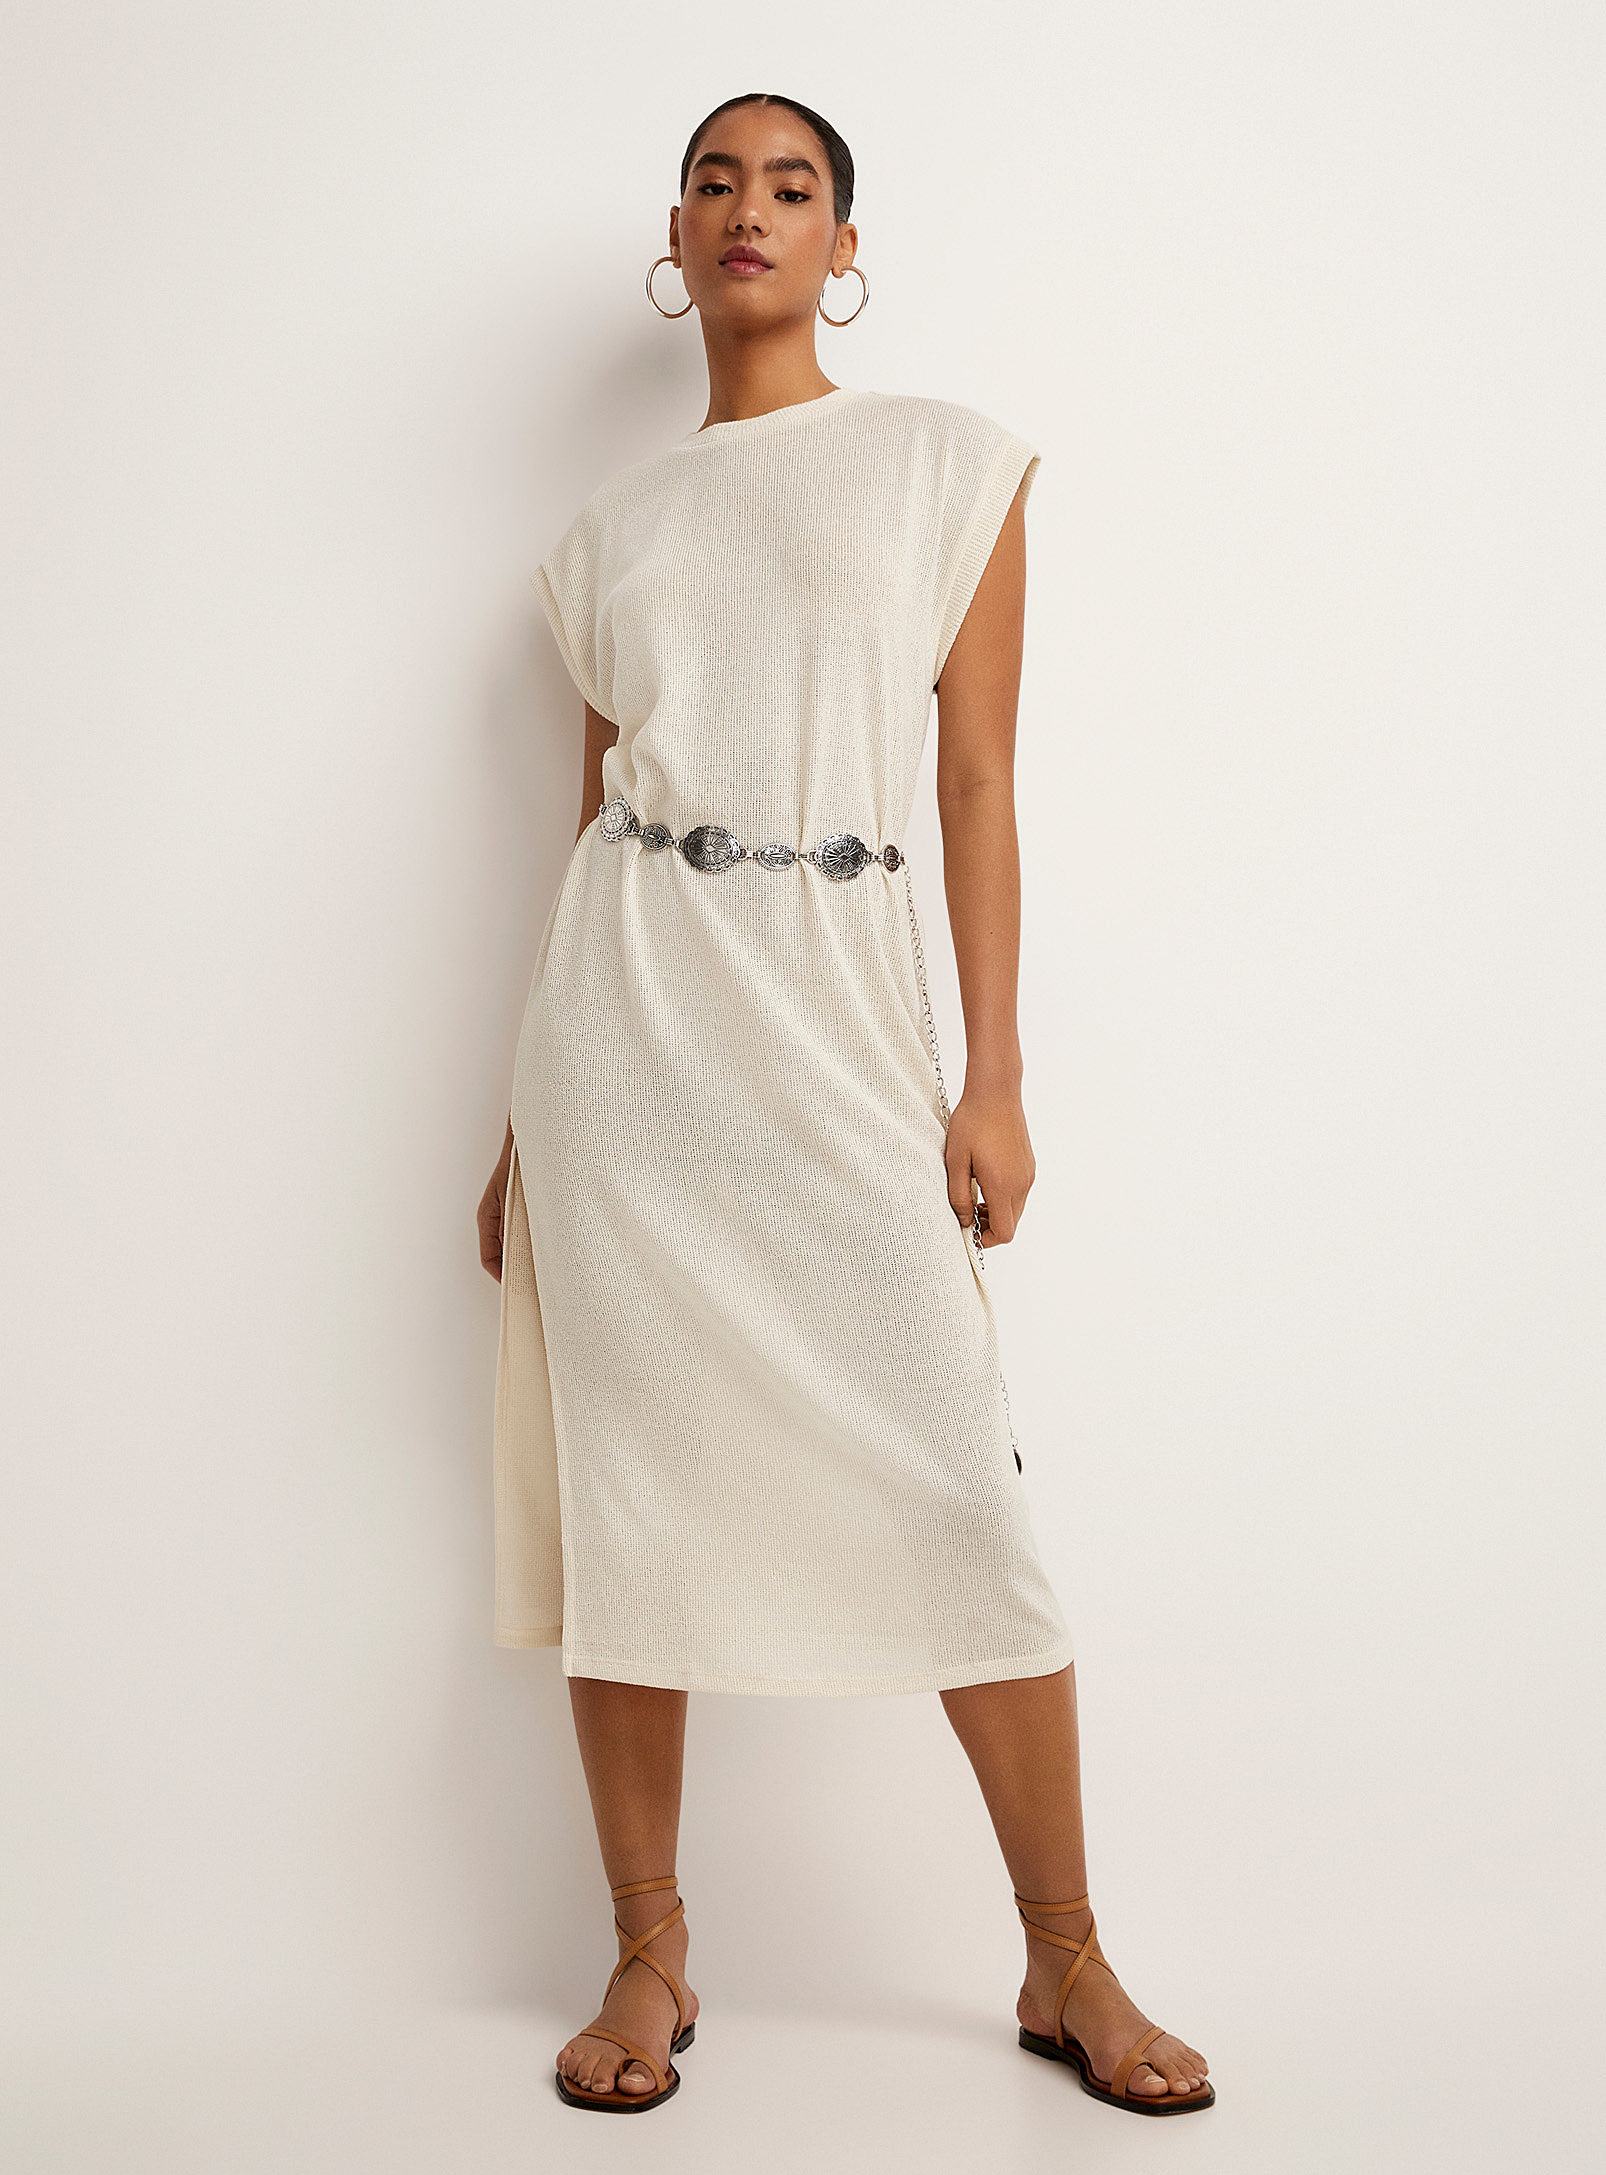 JJXX - La longue robe tricot ivoire Vera